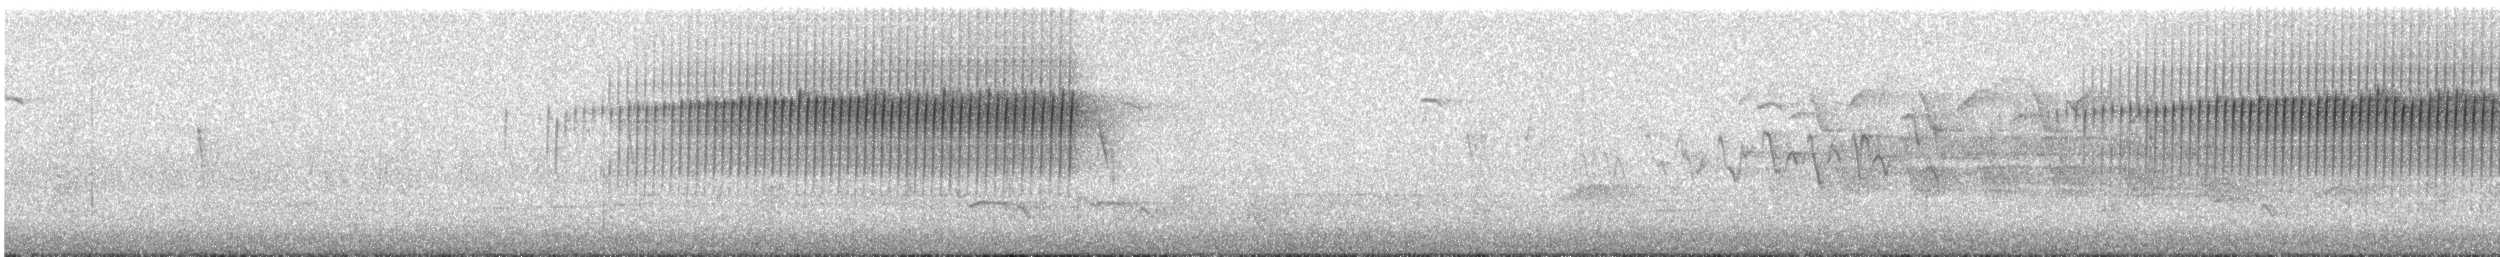 Paruline vermivore - ML56341441